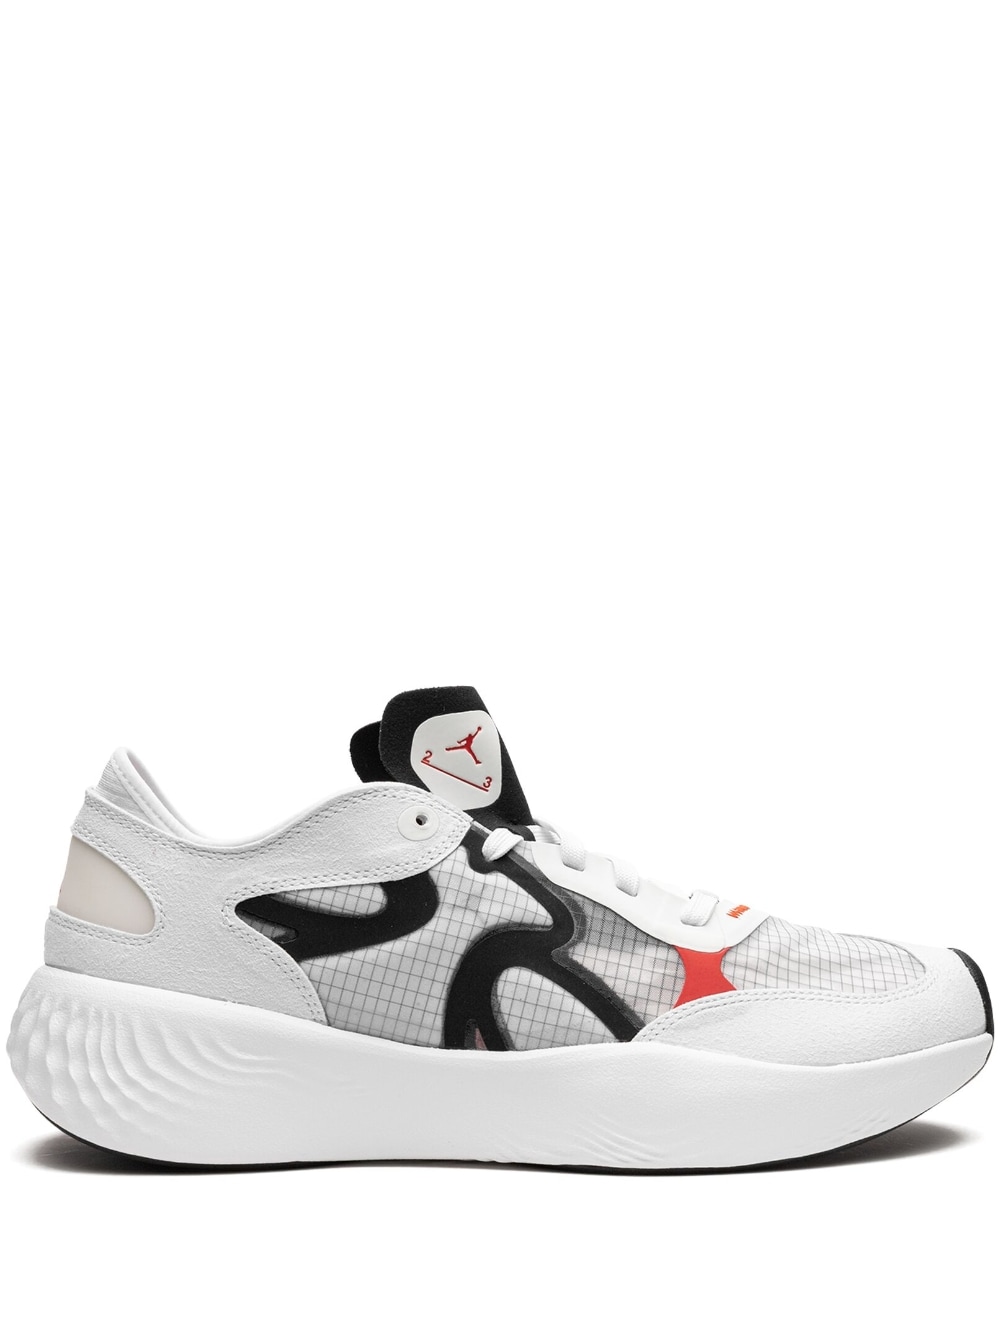 Jordan Delta 3 Low sneakers - White